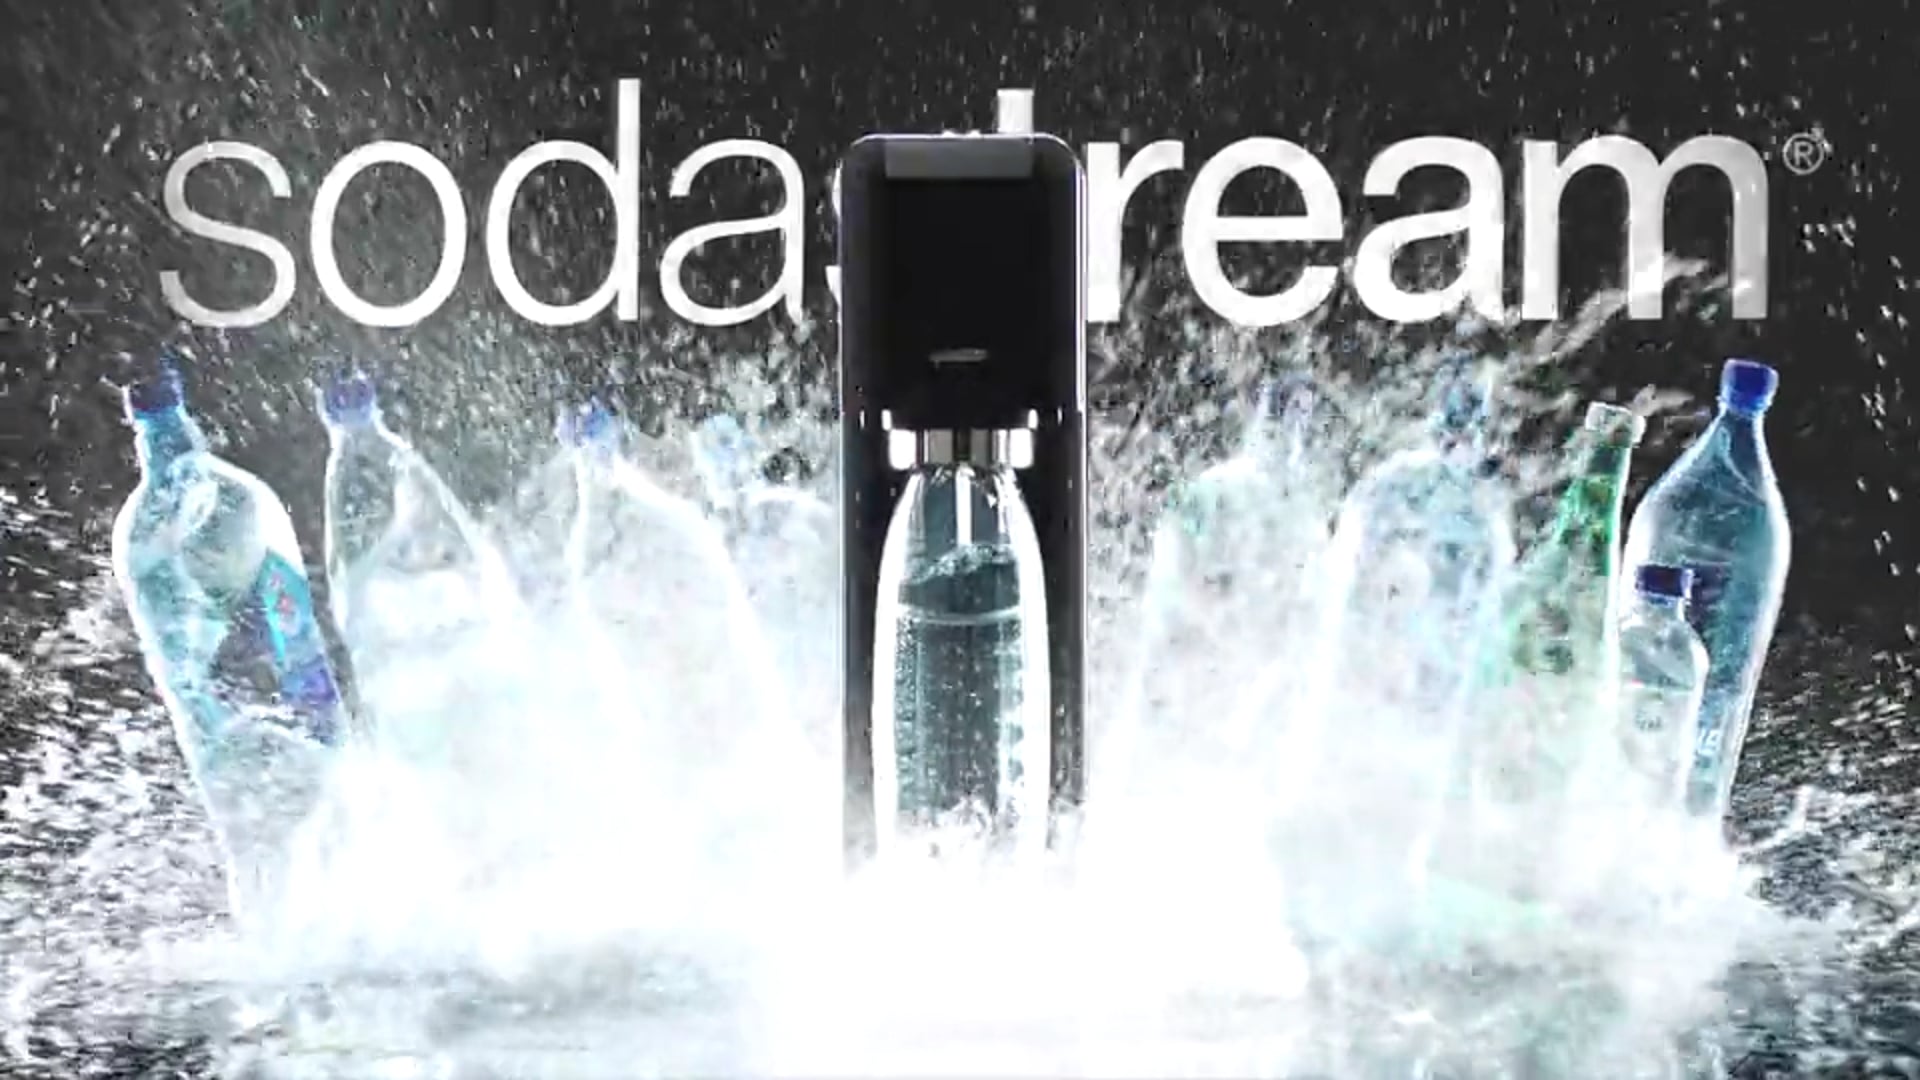 Sodastream Norway | 'Best In Test' Advert